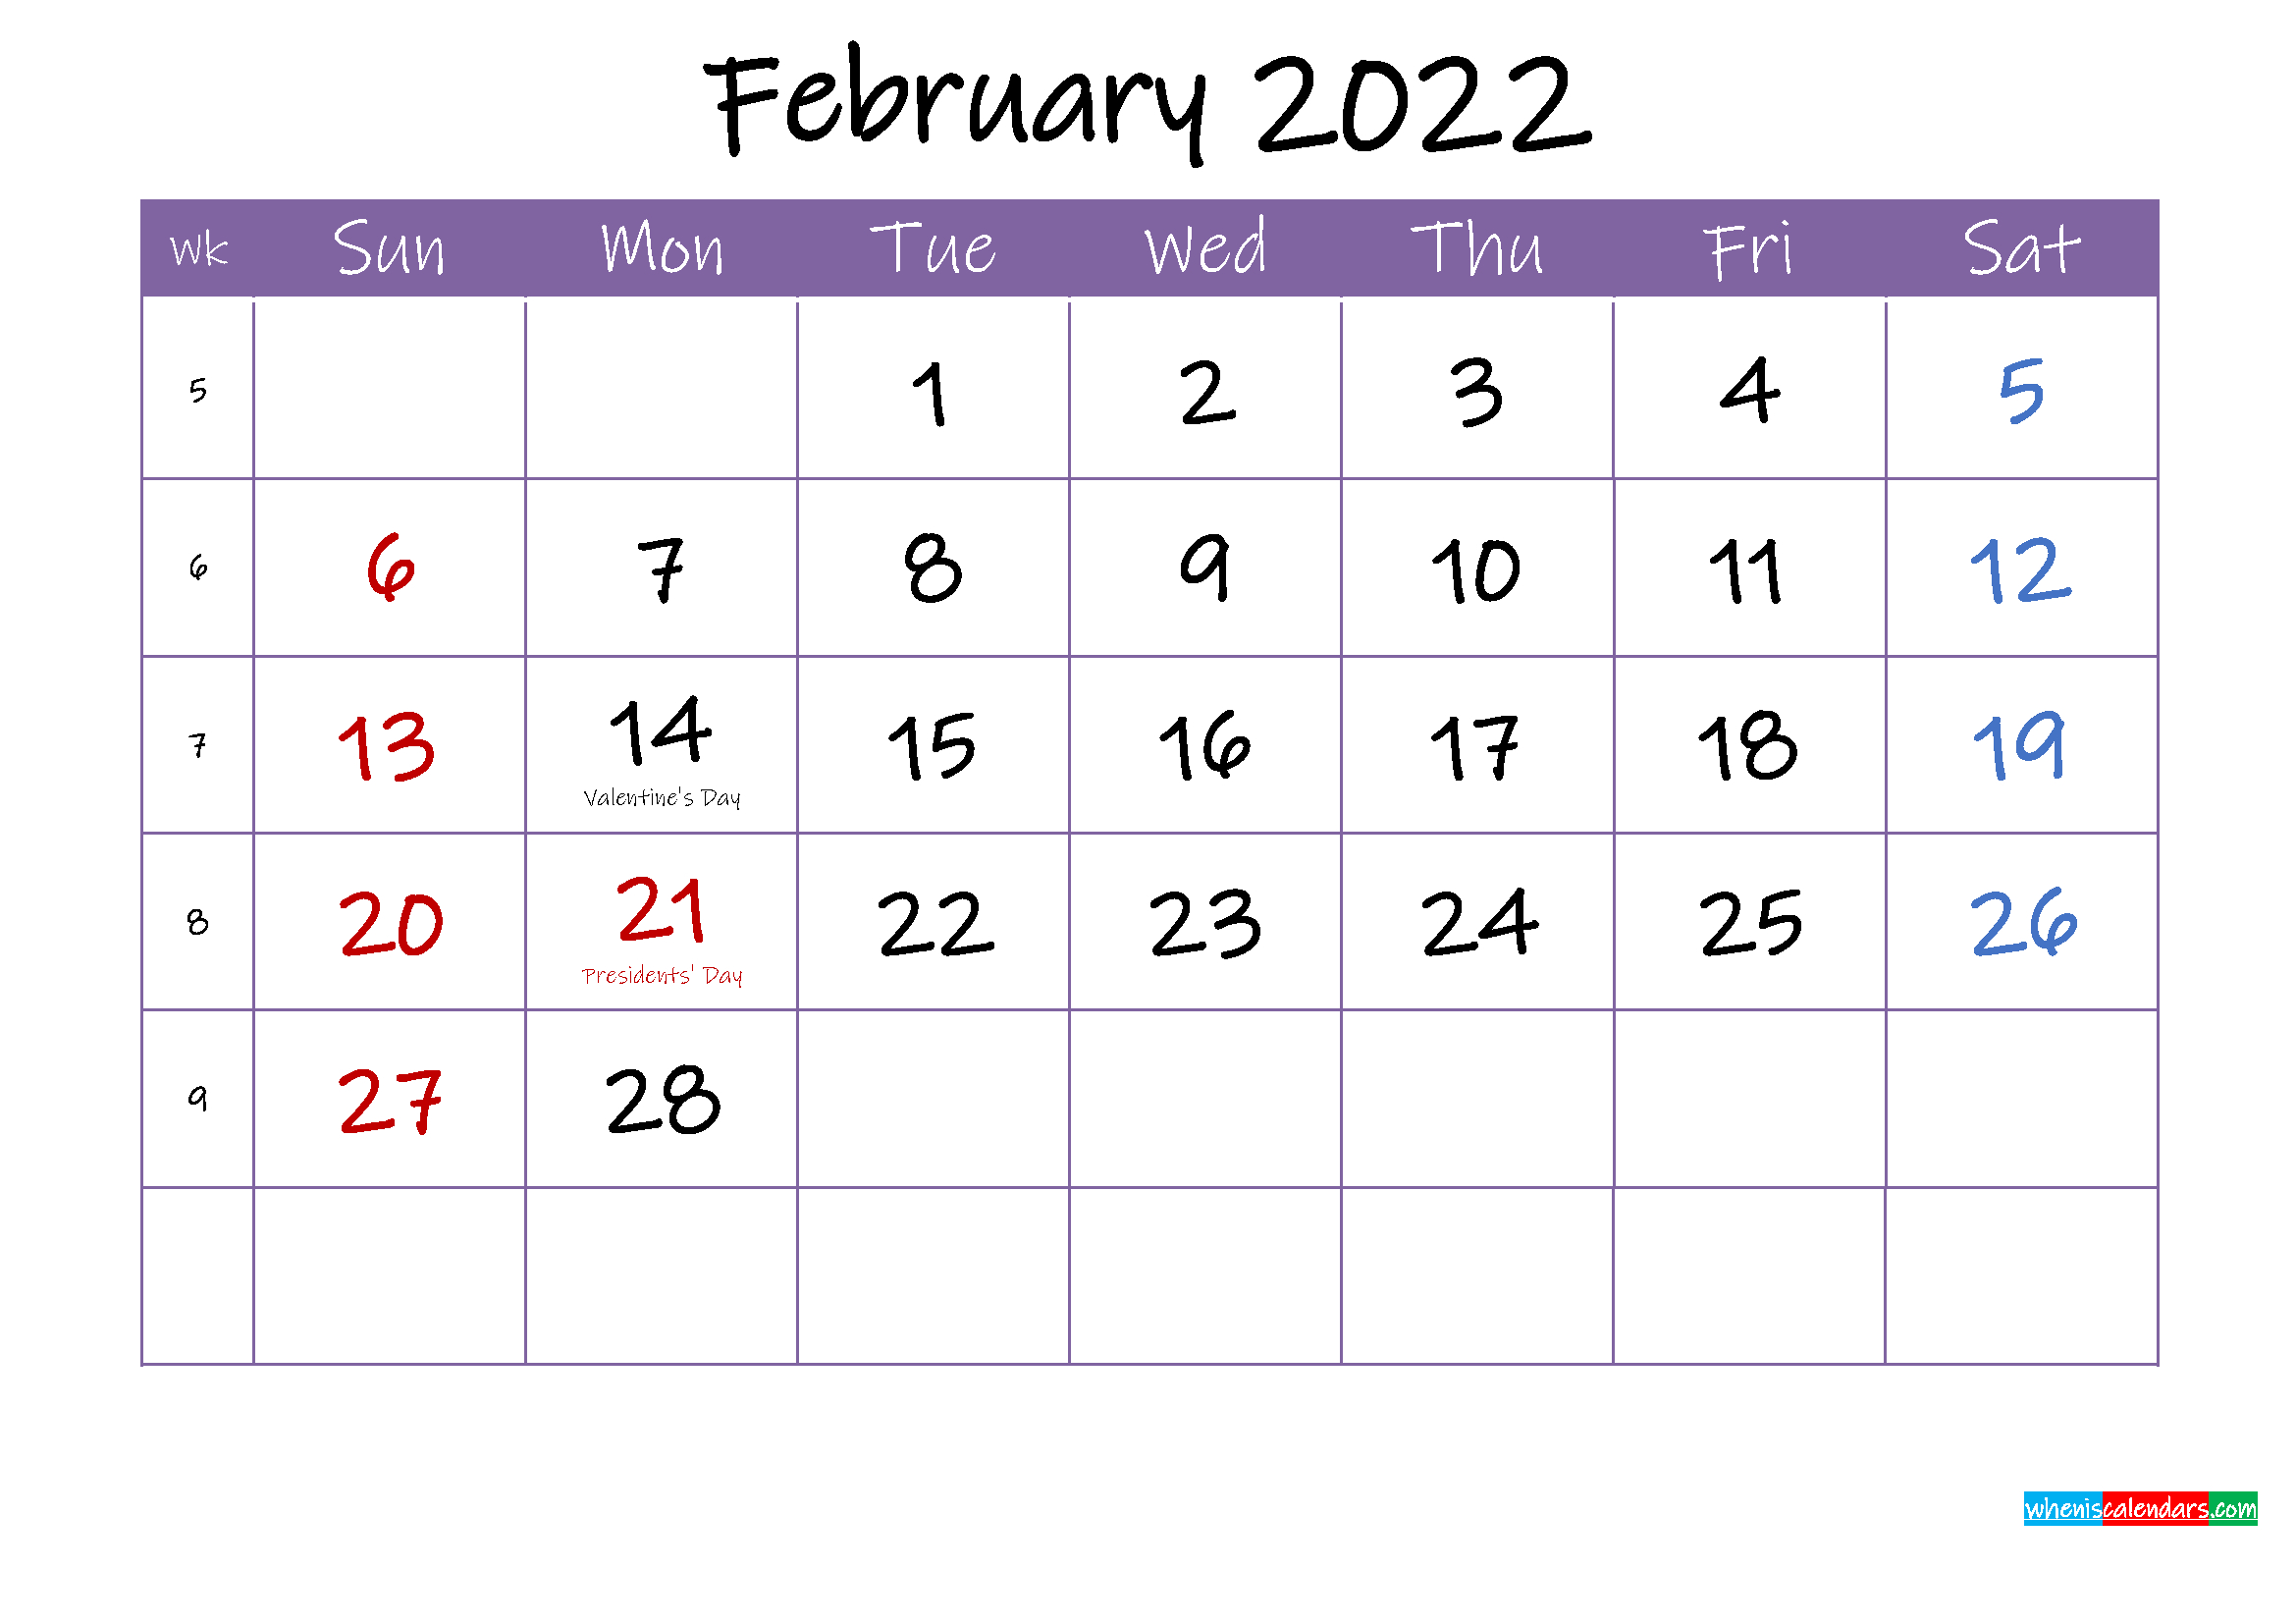 February 2022 Calendar With Holidays Printable - Template